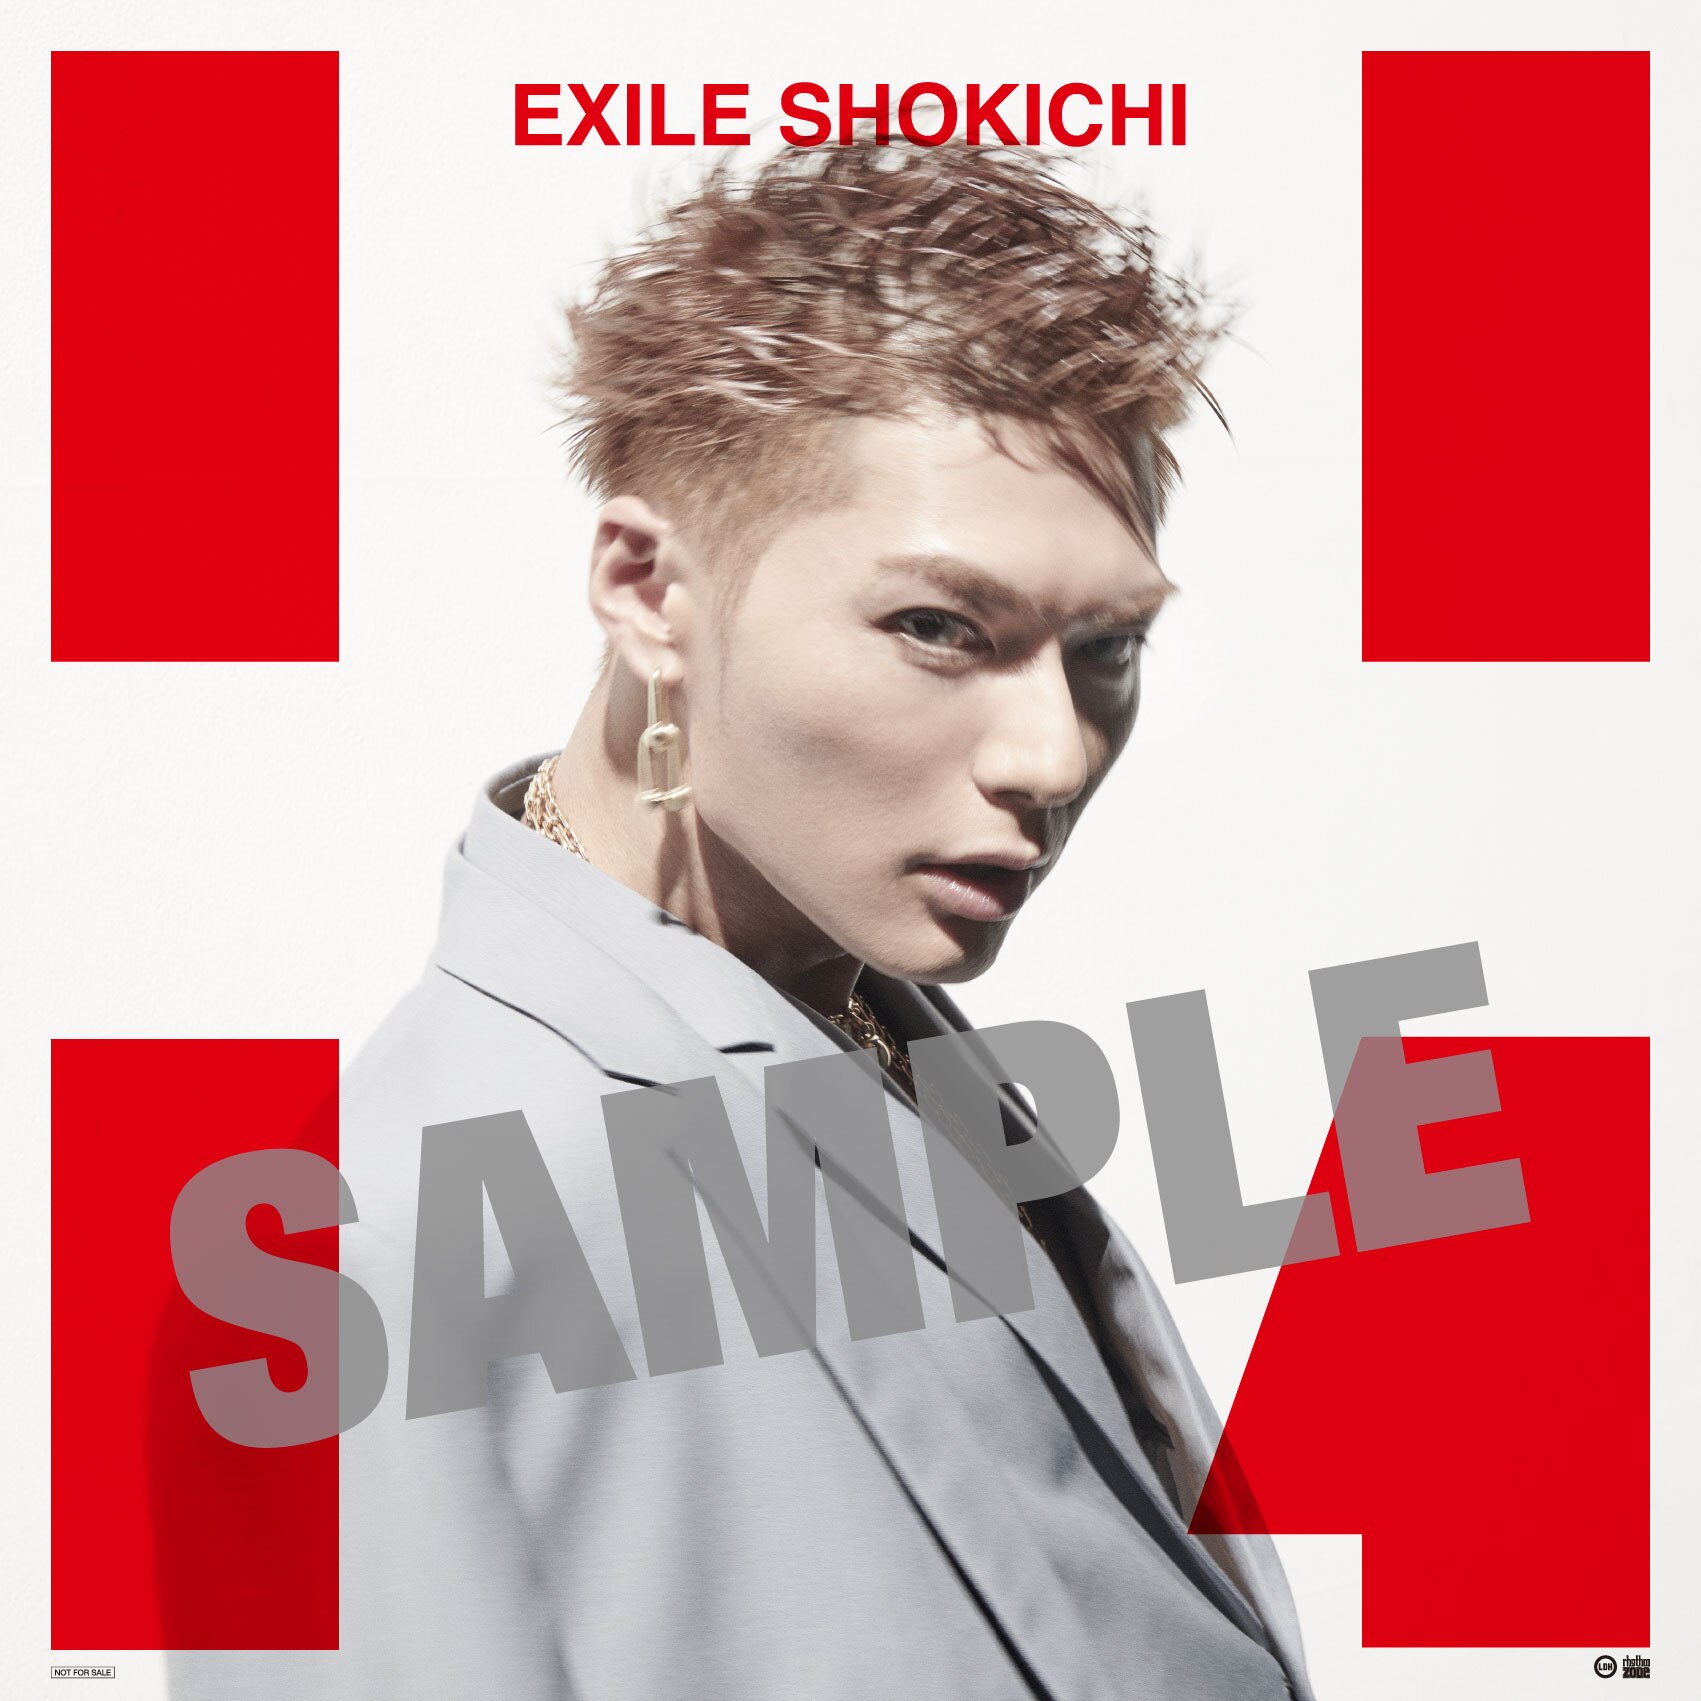 News Exile Shokichi ニュー アルバム 1114 全国cd Shop共通特典デザイン決定 Exile Shokichi